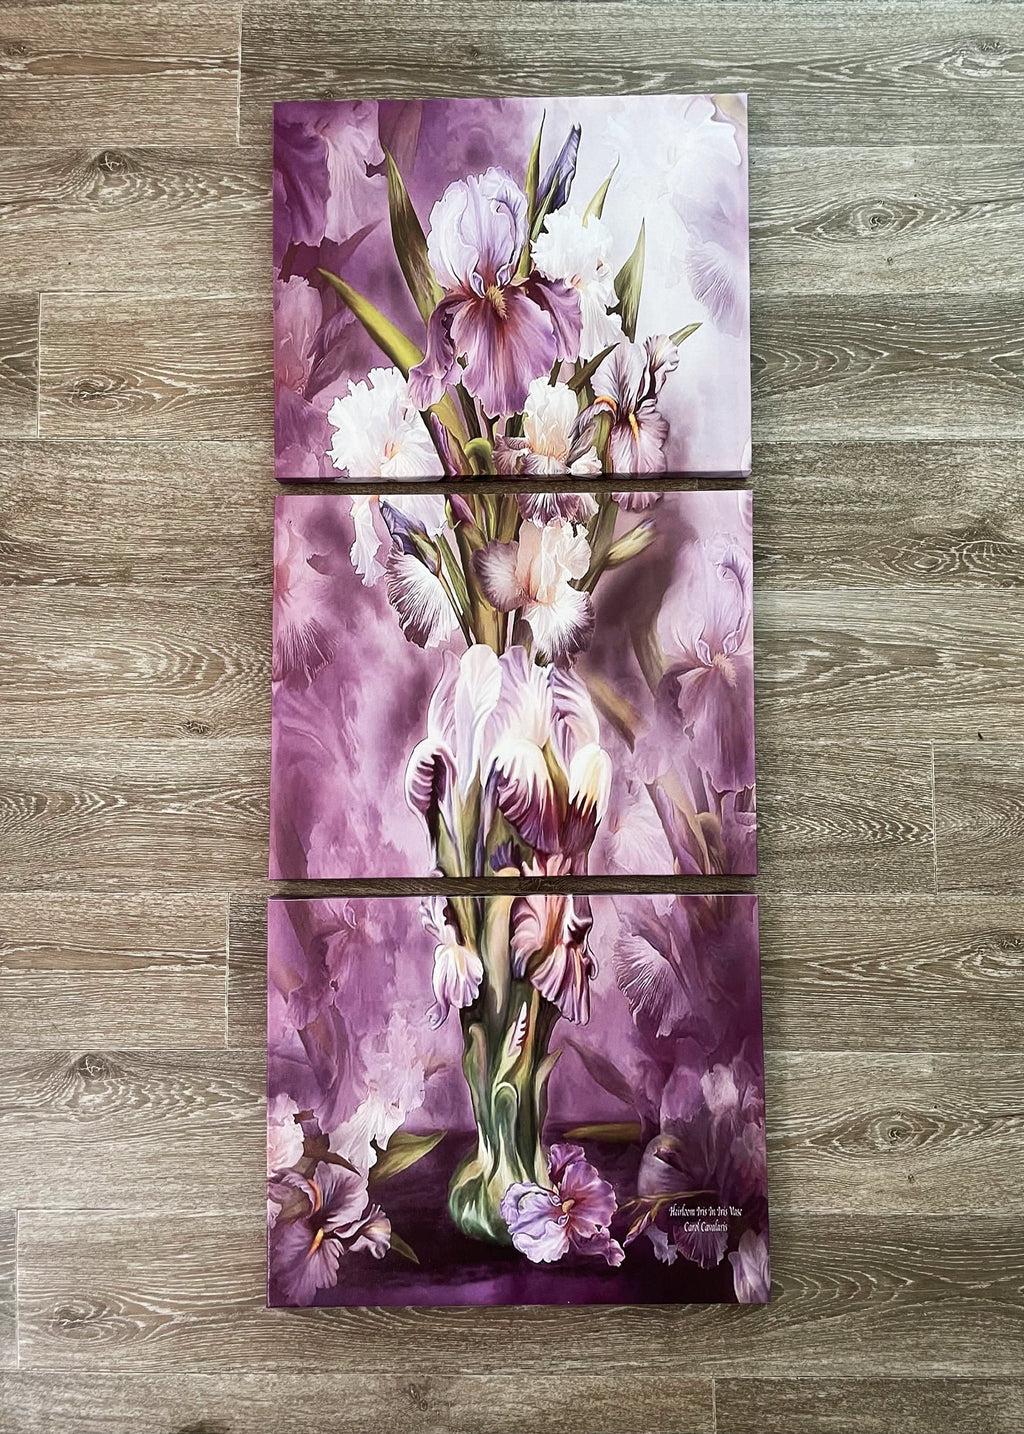 Framed 3 Panels - Finished Products - Flower